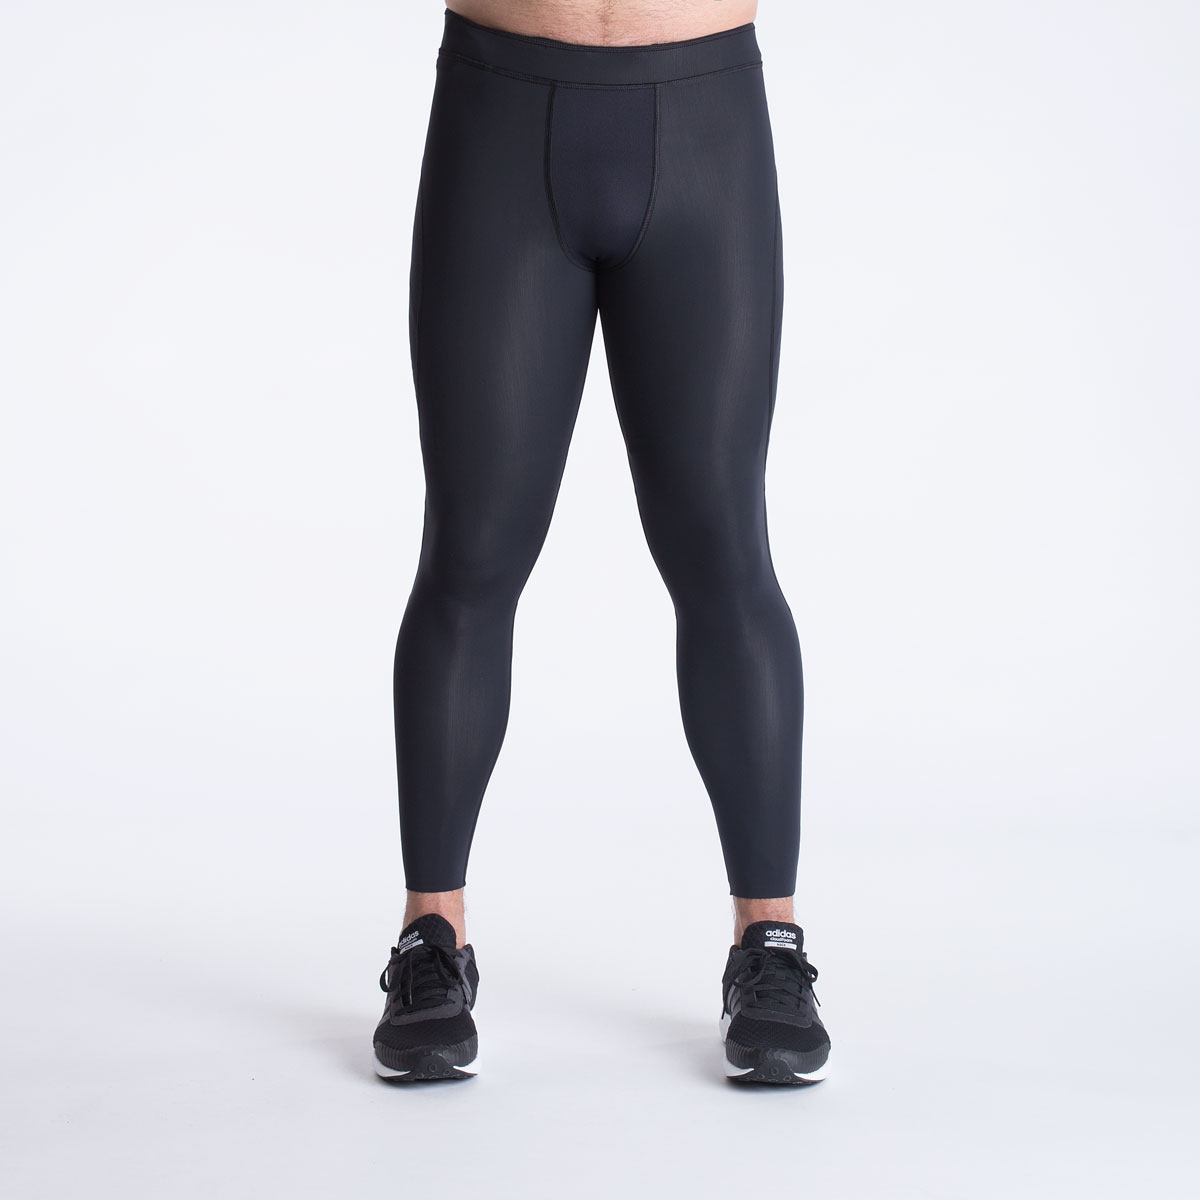 Adidas PRIMEkNIT purple mens compression shorts SZ 3XL NWT $100 NO PADS |  eBay